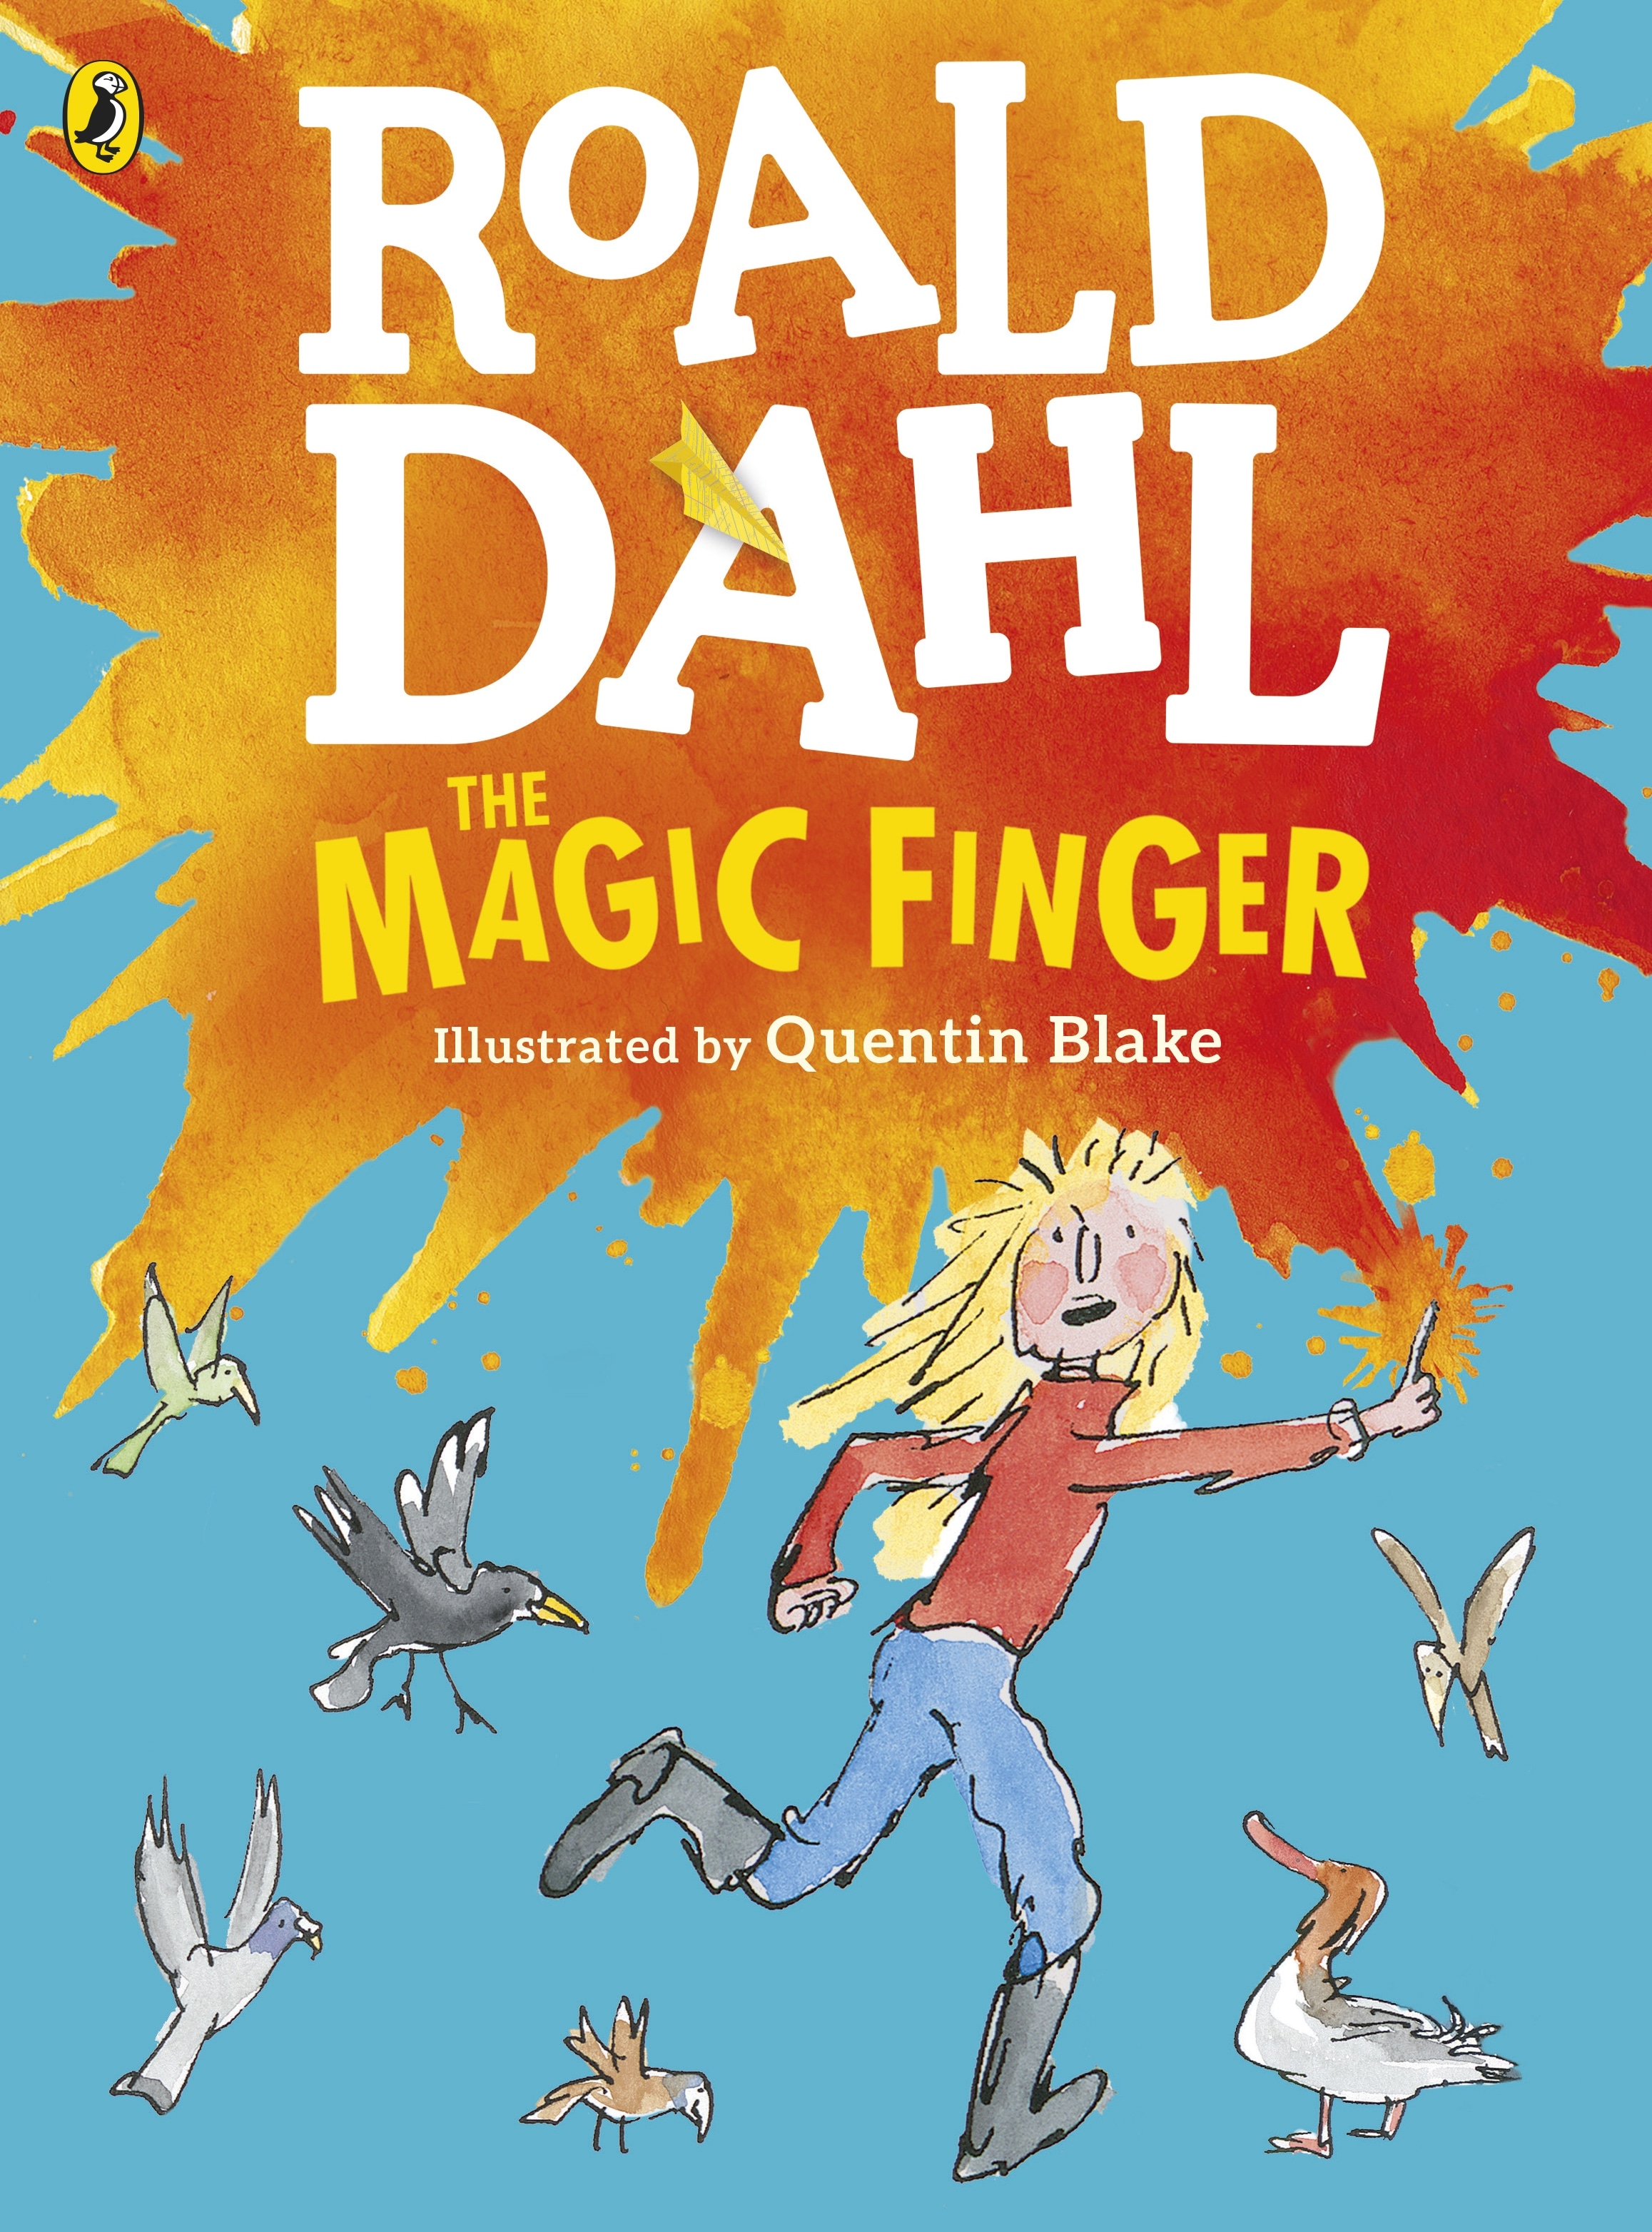 Book “The Magic Finger” by Roald Dahl — June 2, 2016